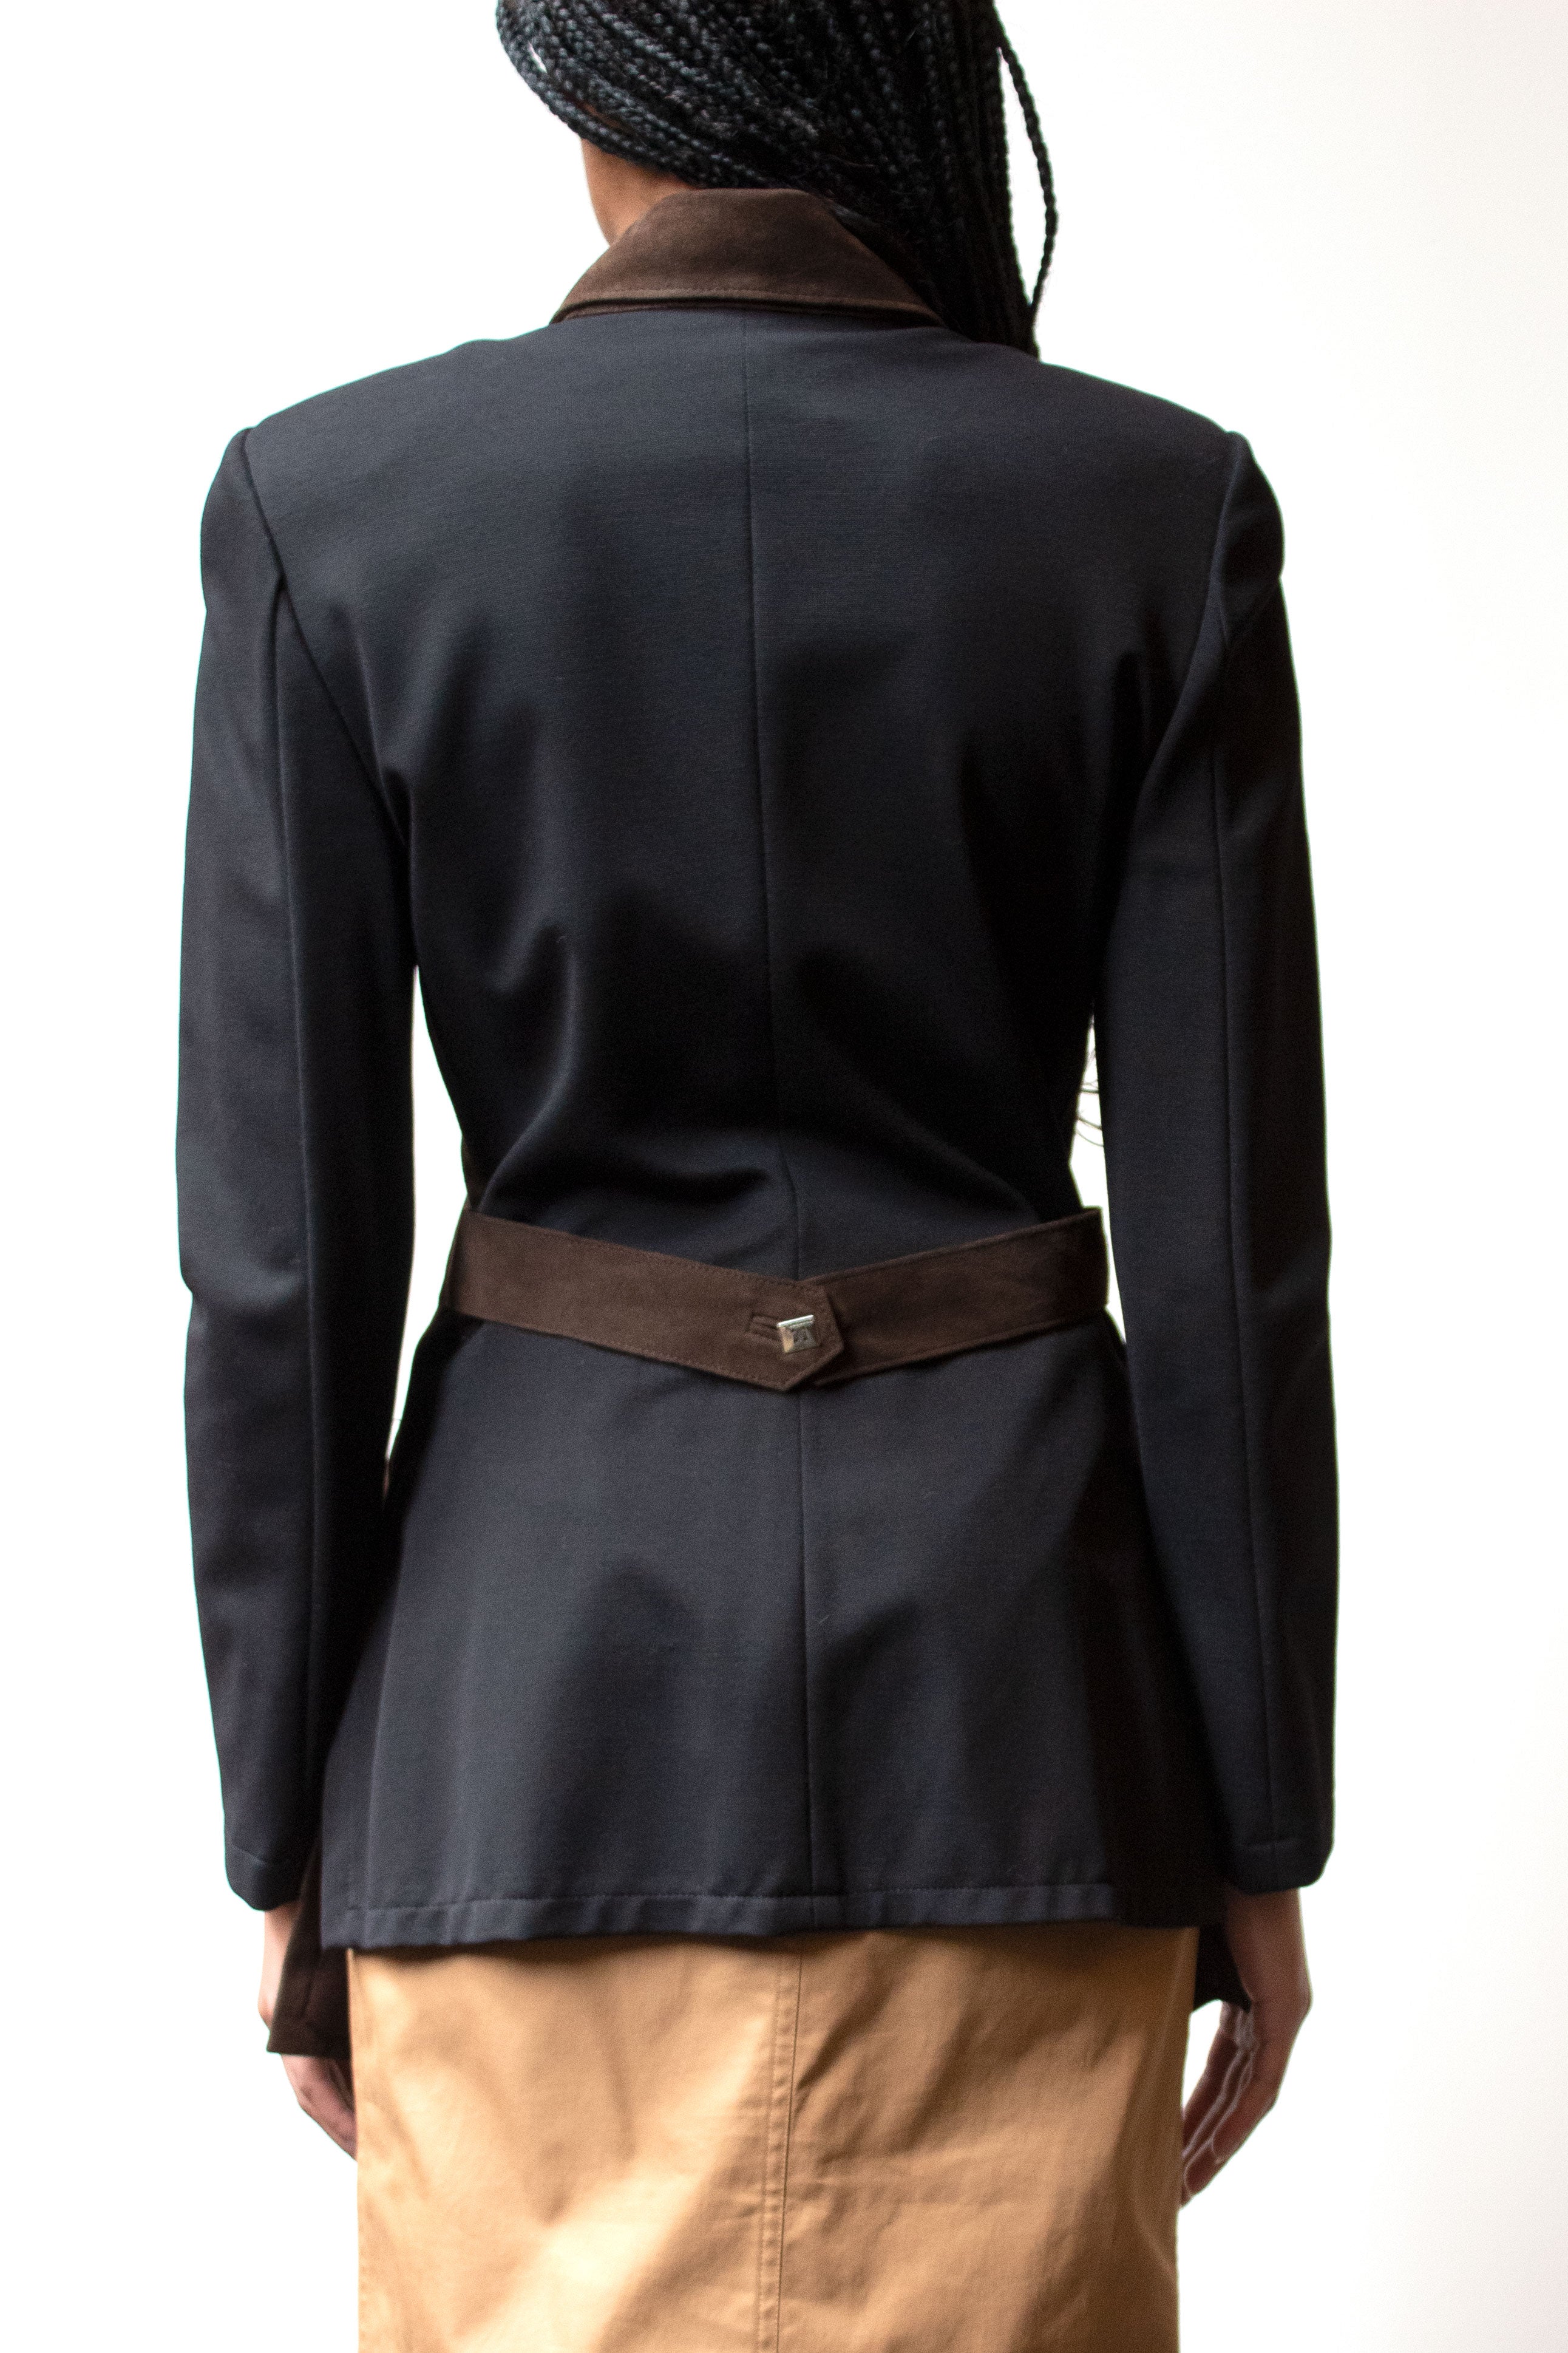 Karl Lagerfeld for Neiman Marcus brown suede jacket